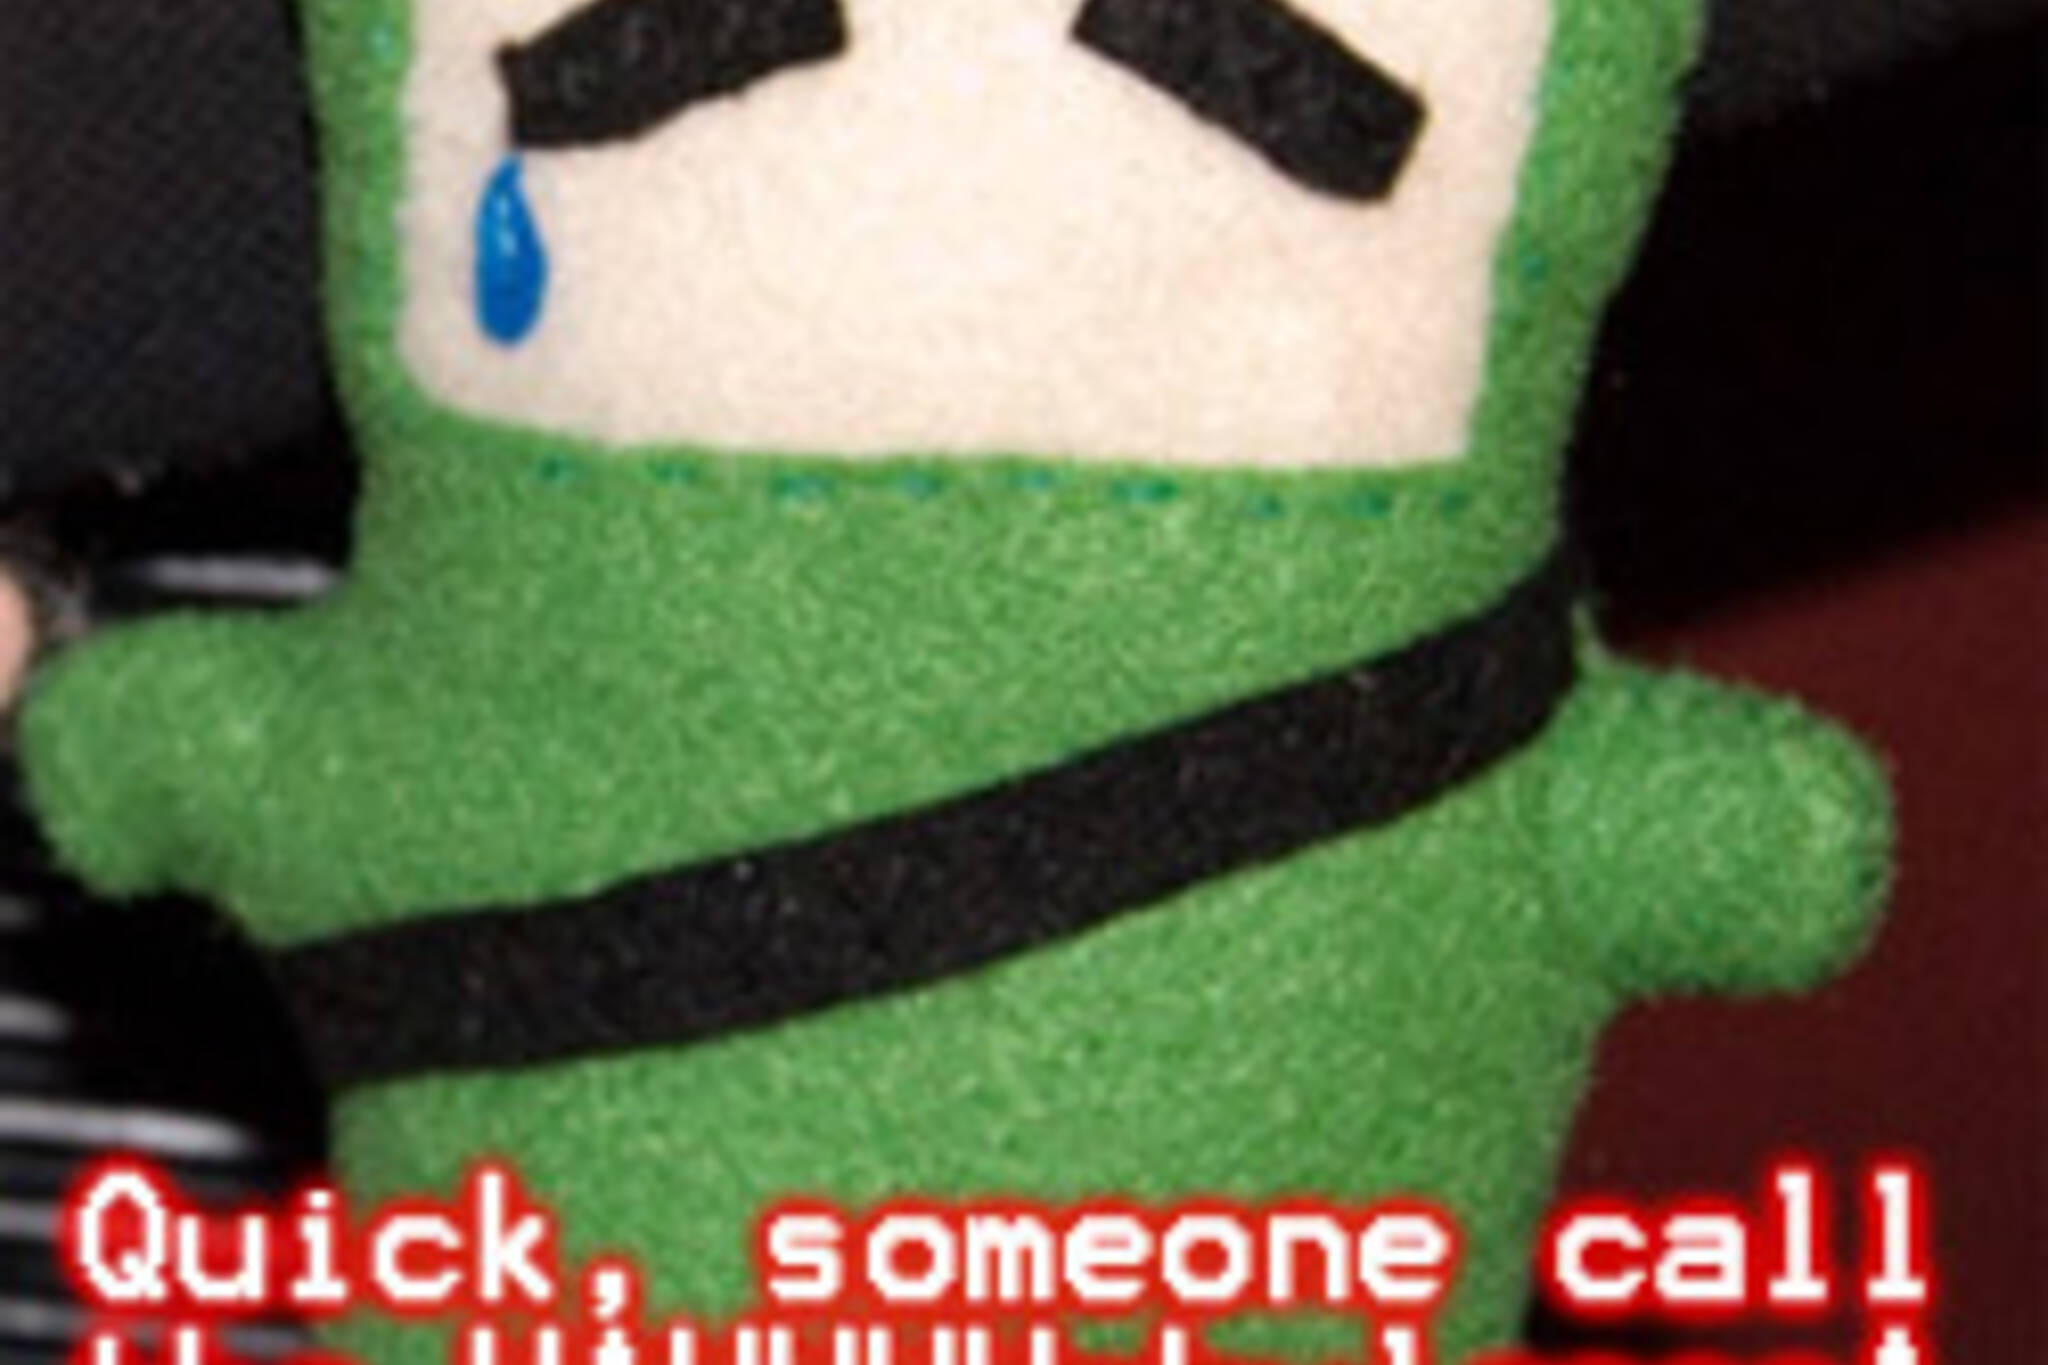 You made sad green ninja even sadder